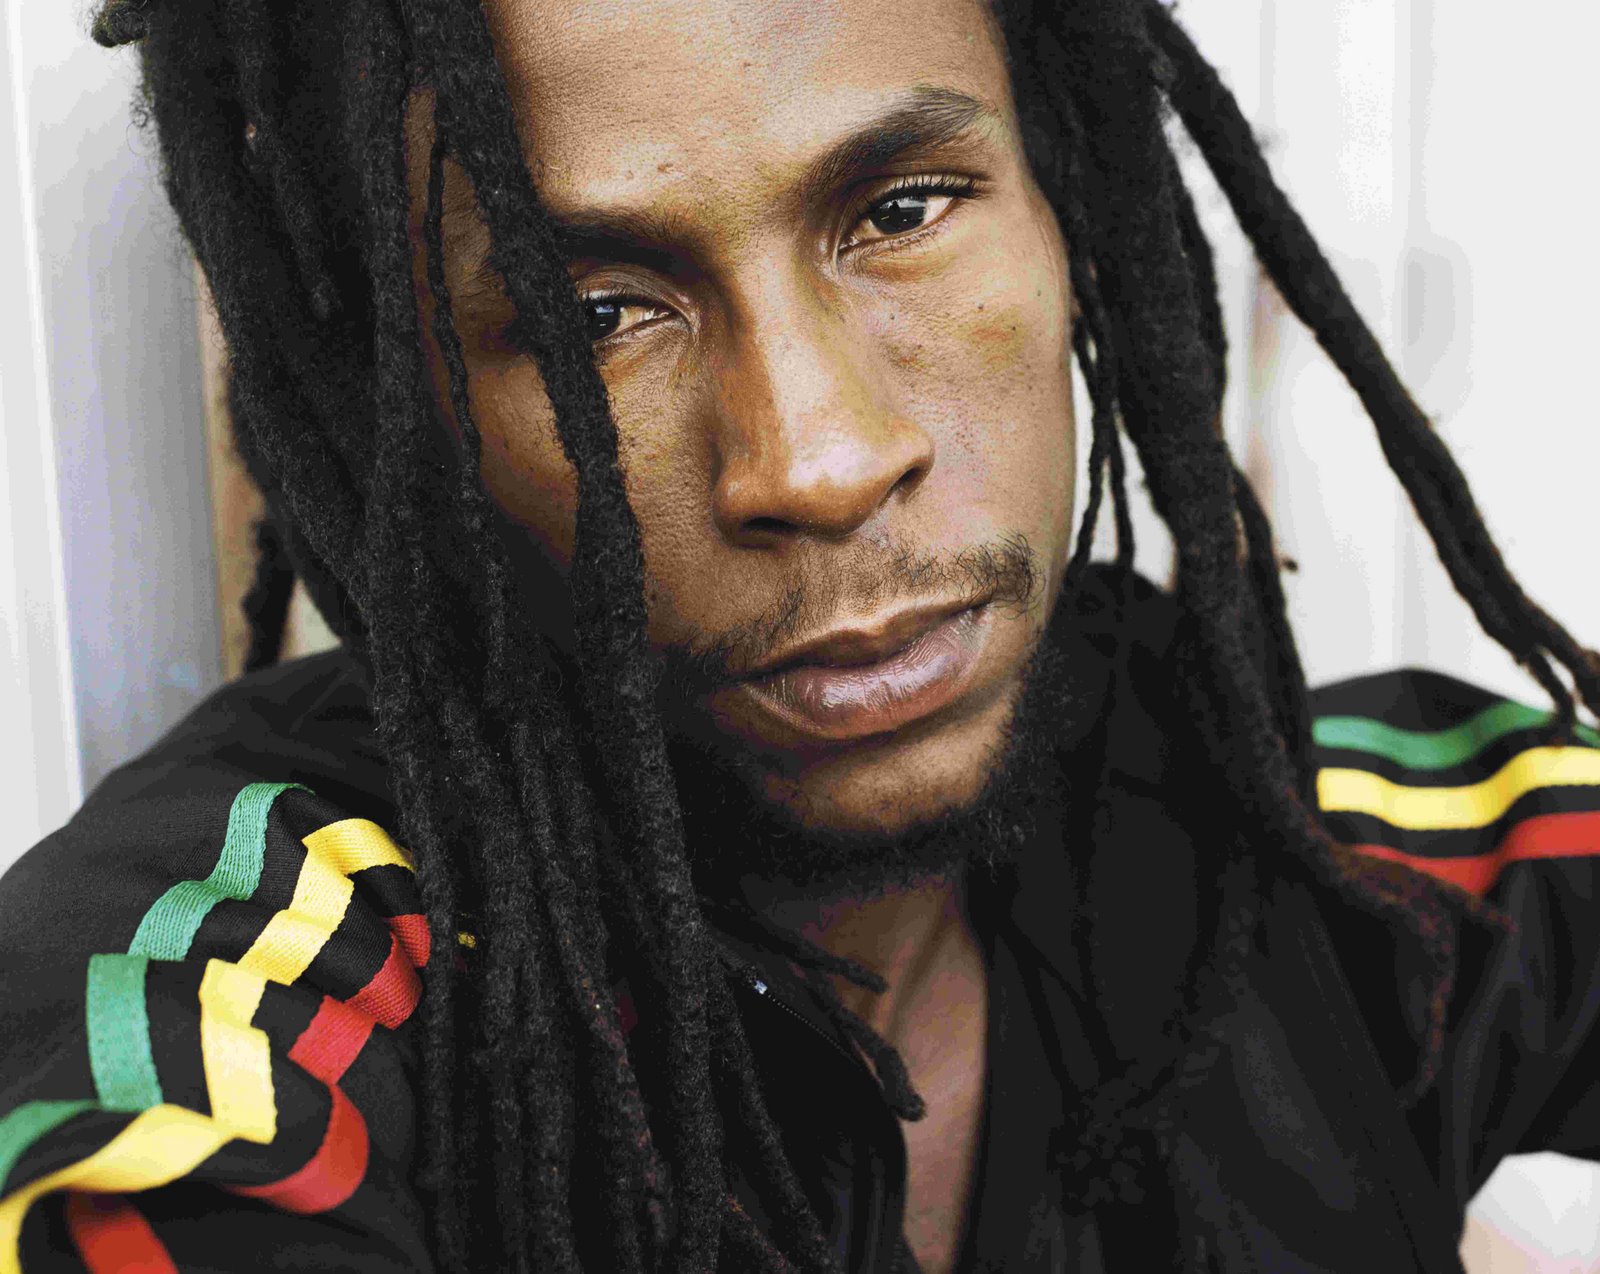 Reggae singer Jah Cure